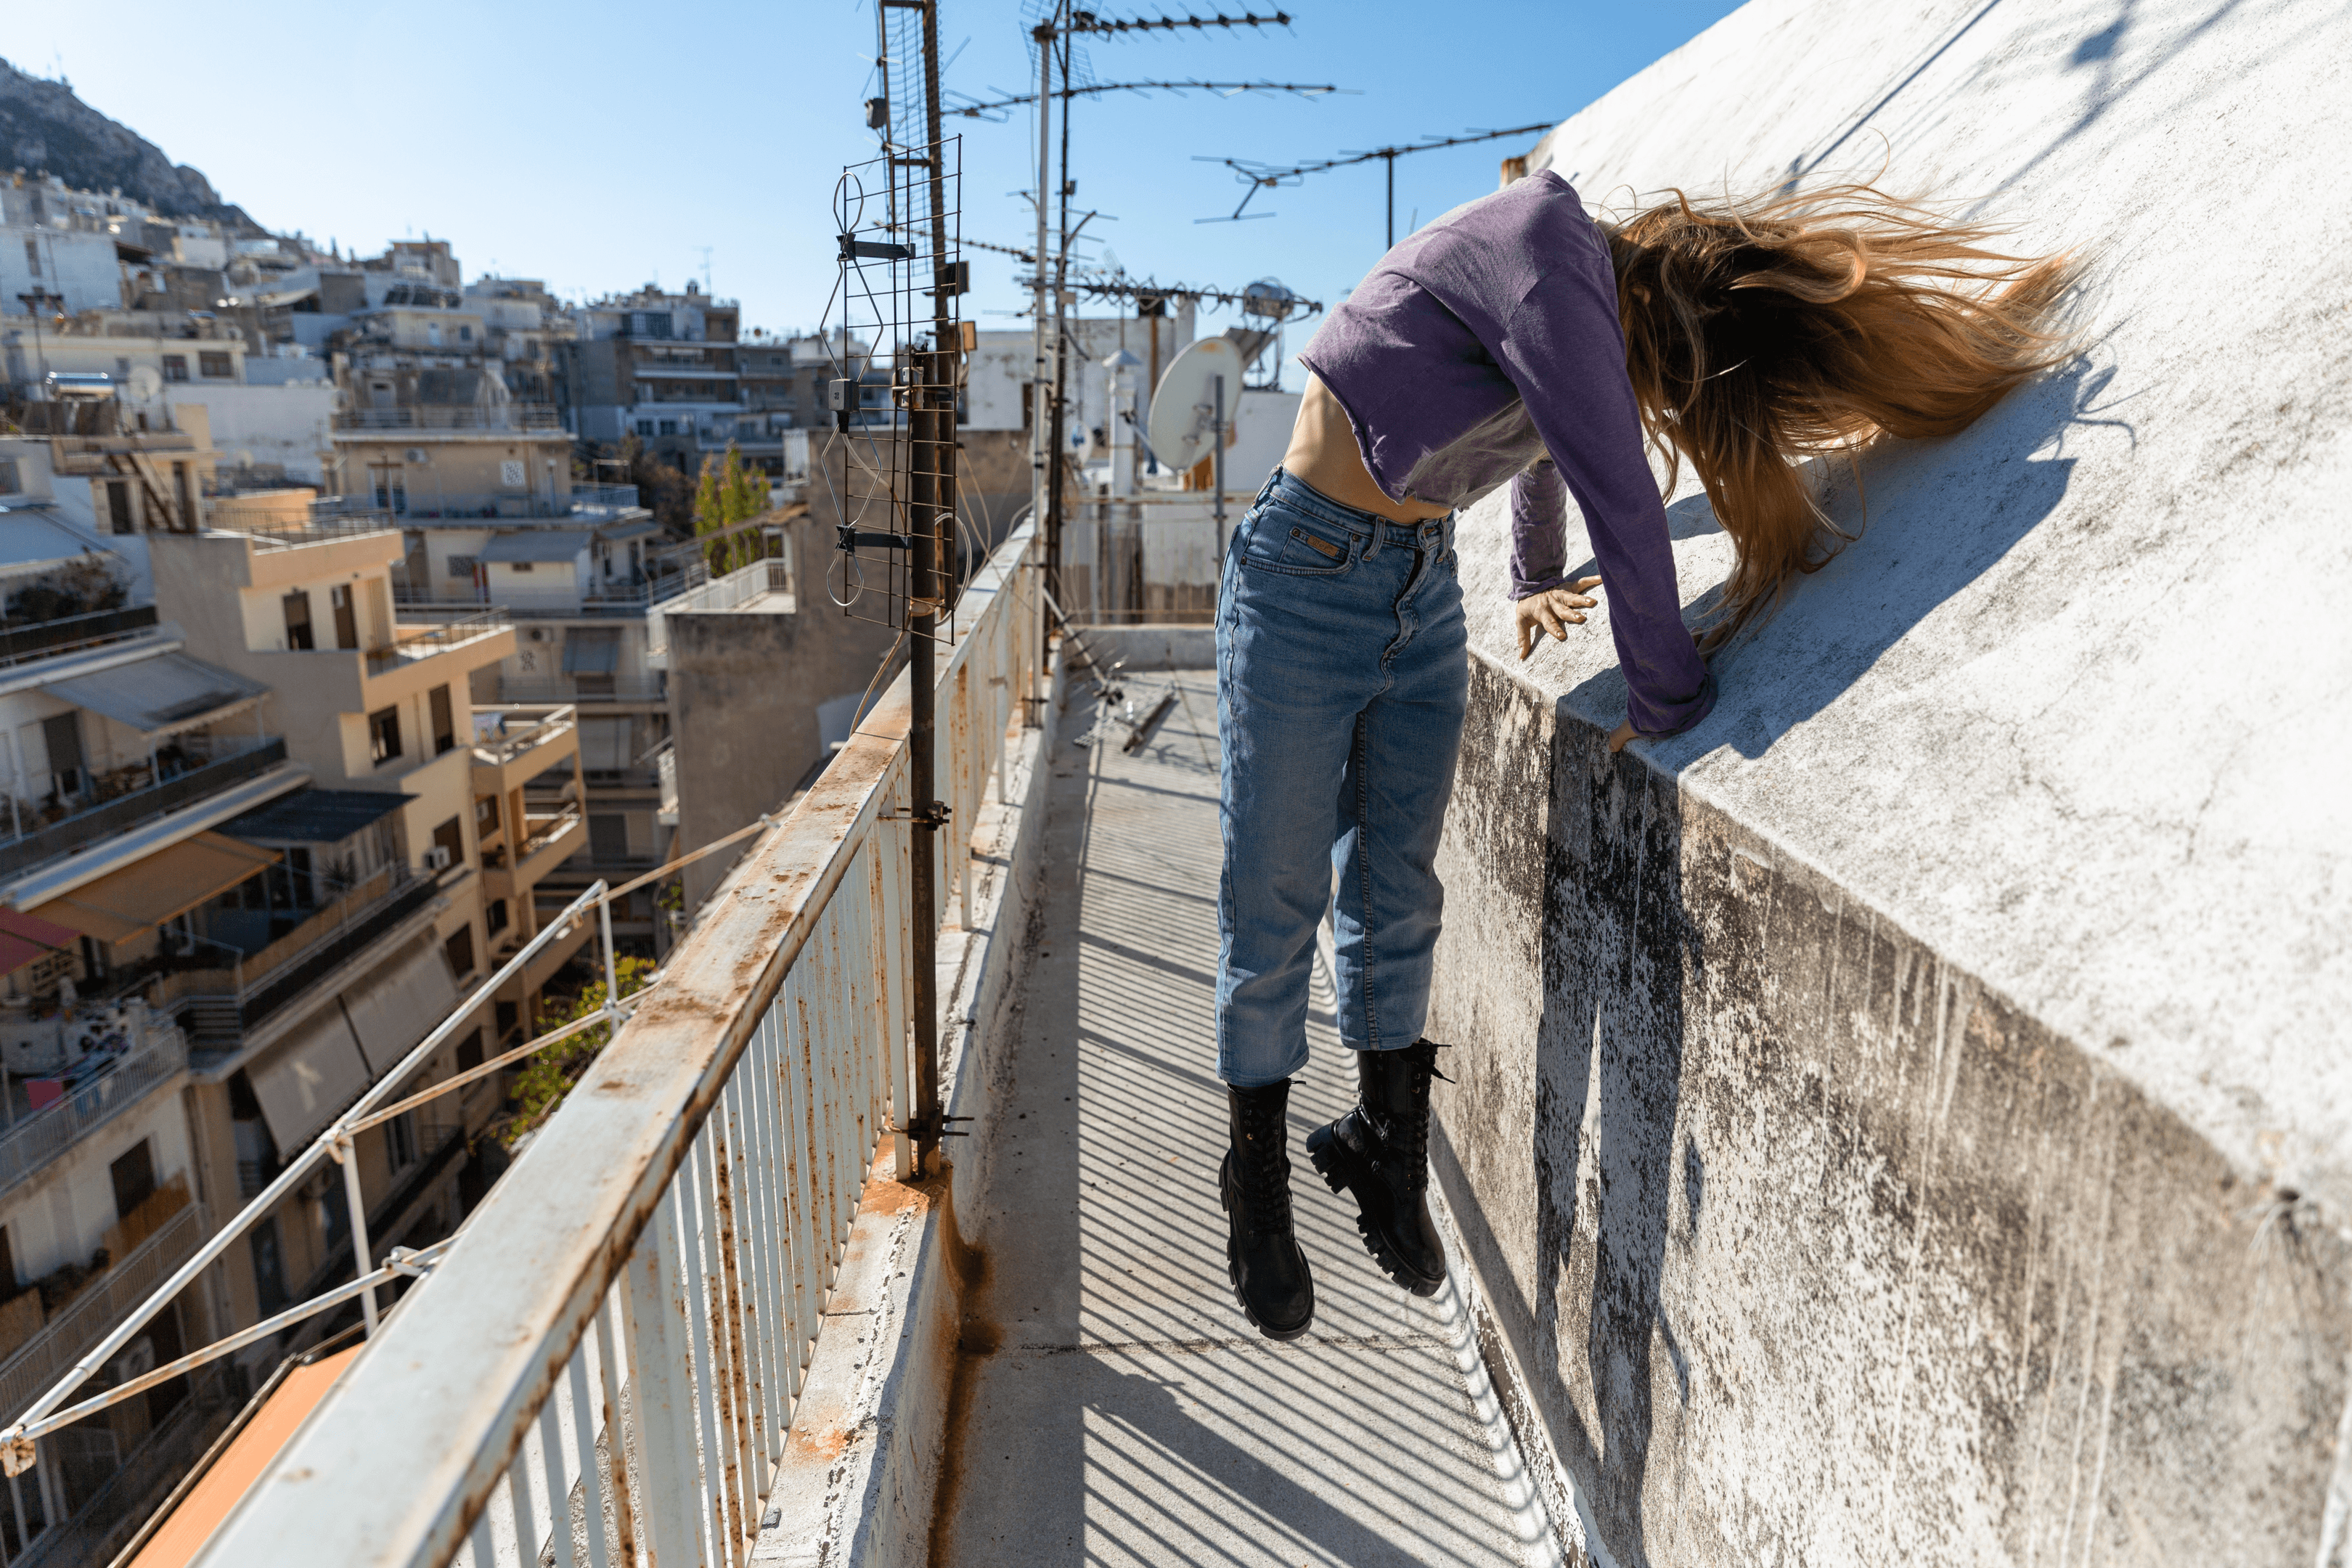 Dancers on Rooftops #85 - Evi (Greece, 2021)